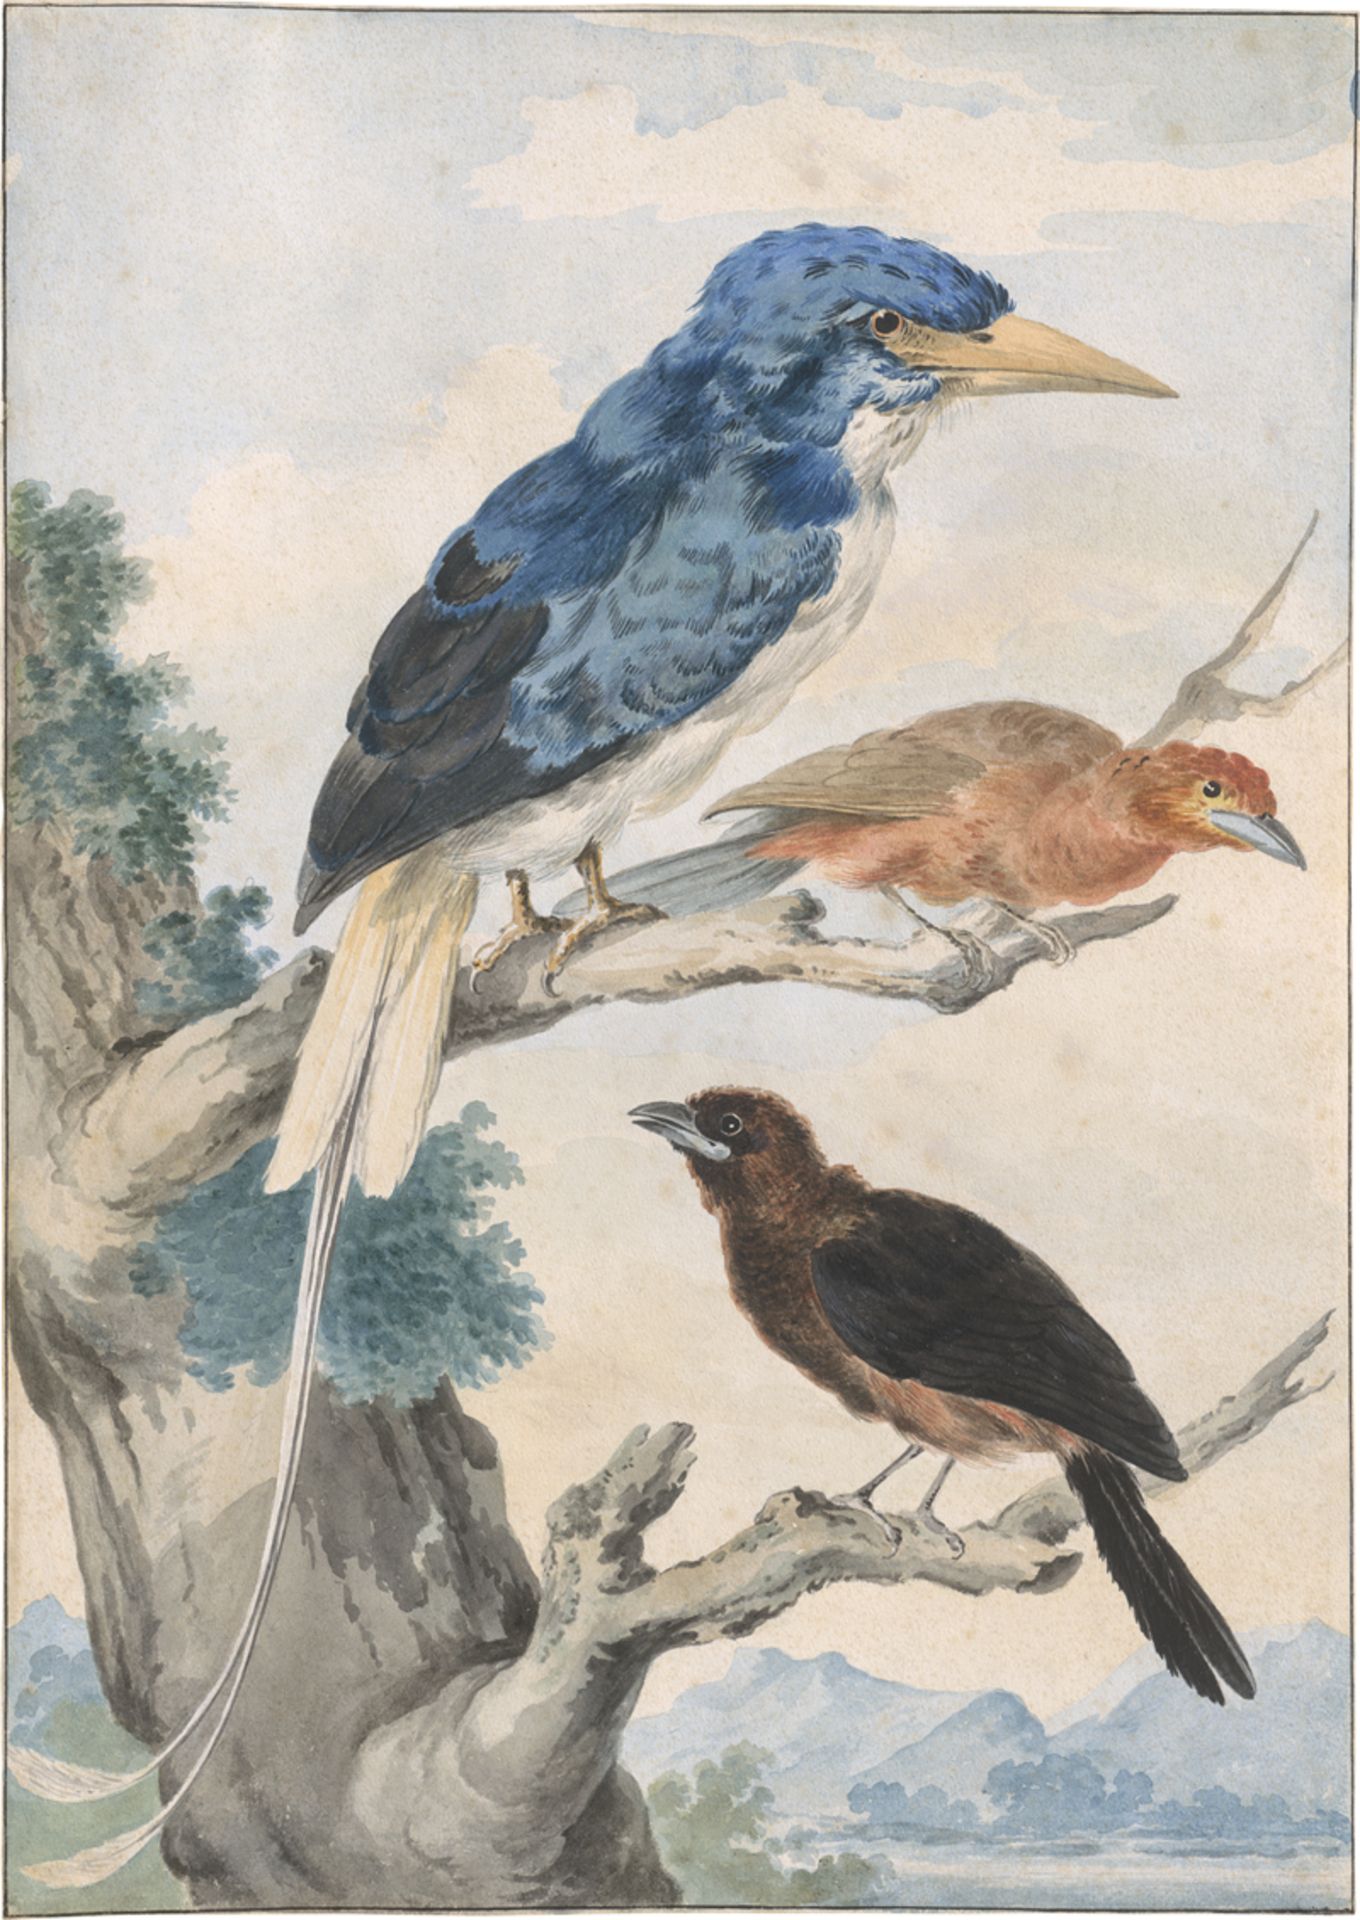 Schouman, Aert: Studienblatt mit drei Vögeln